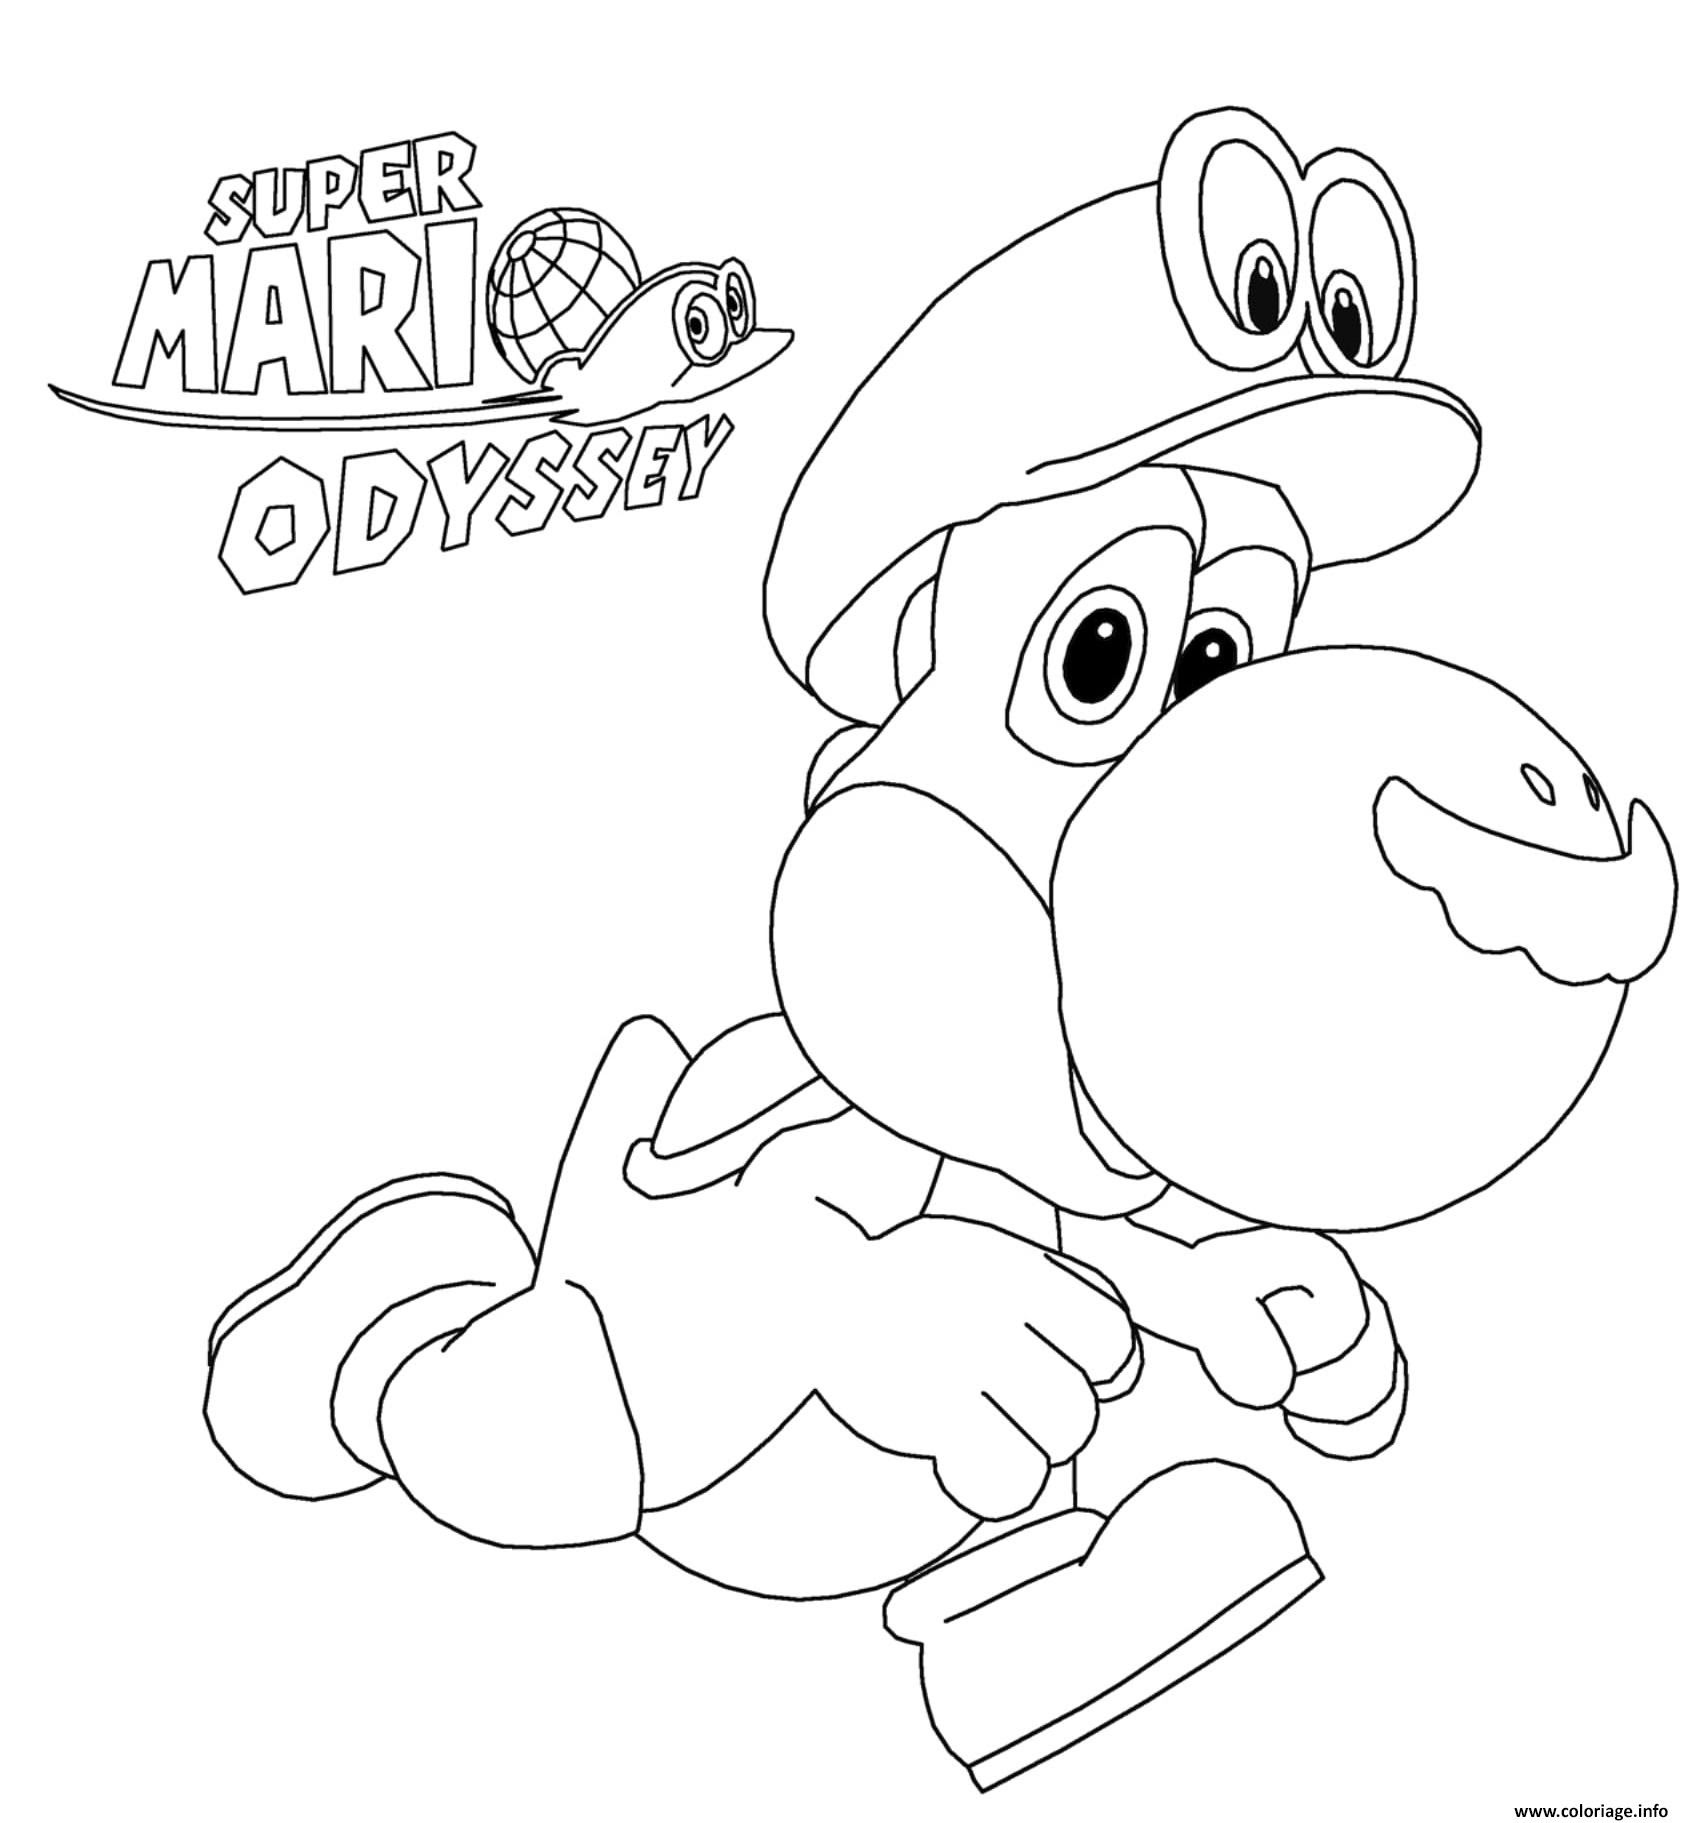 Coloriage Magique Addition Dessin Super Mario Odyssey A